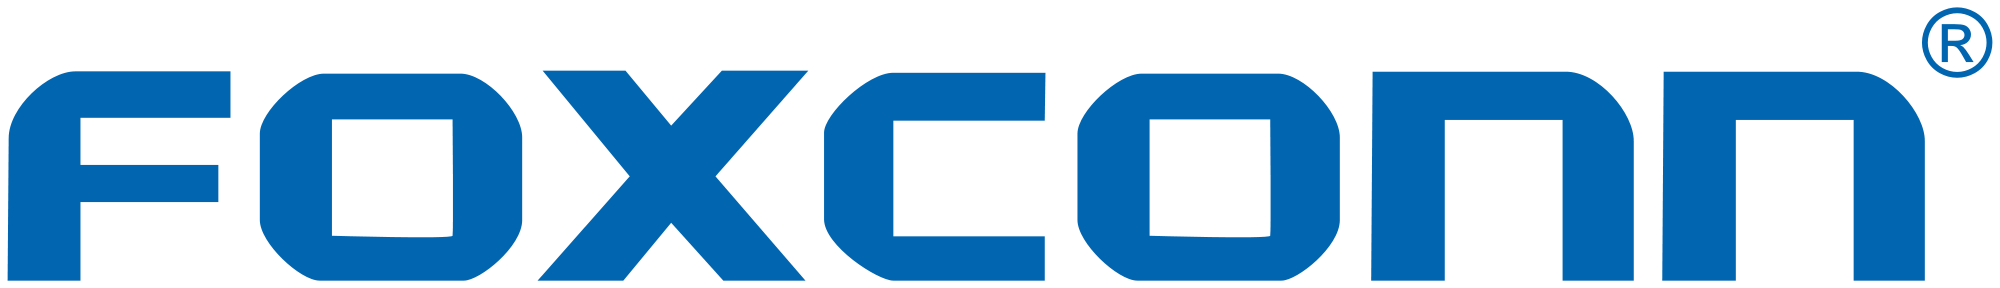 Foxconn Logo - Foxconn logo.svg